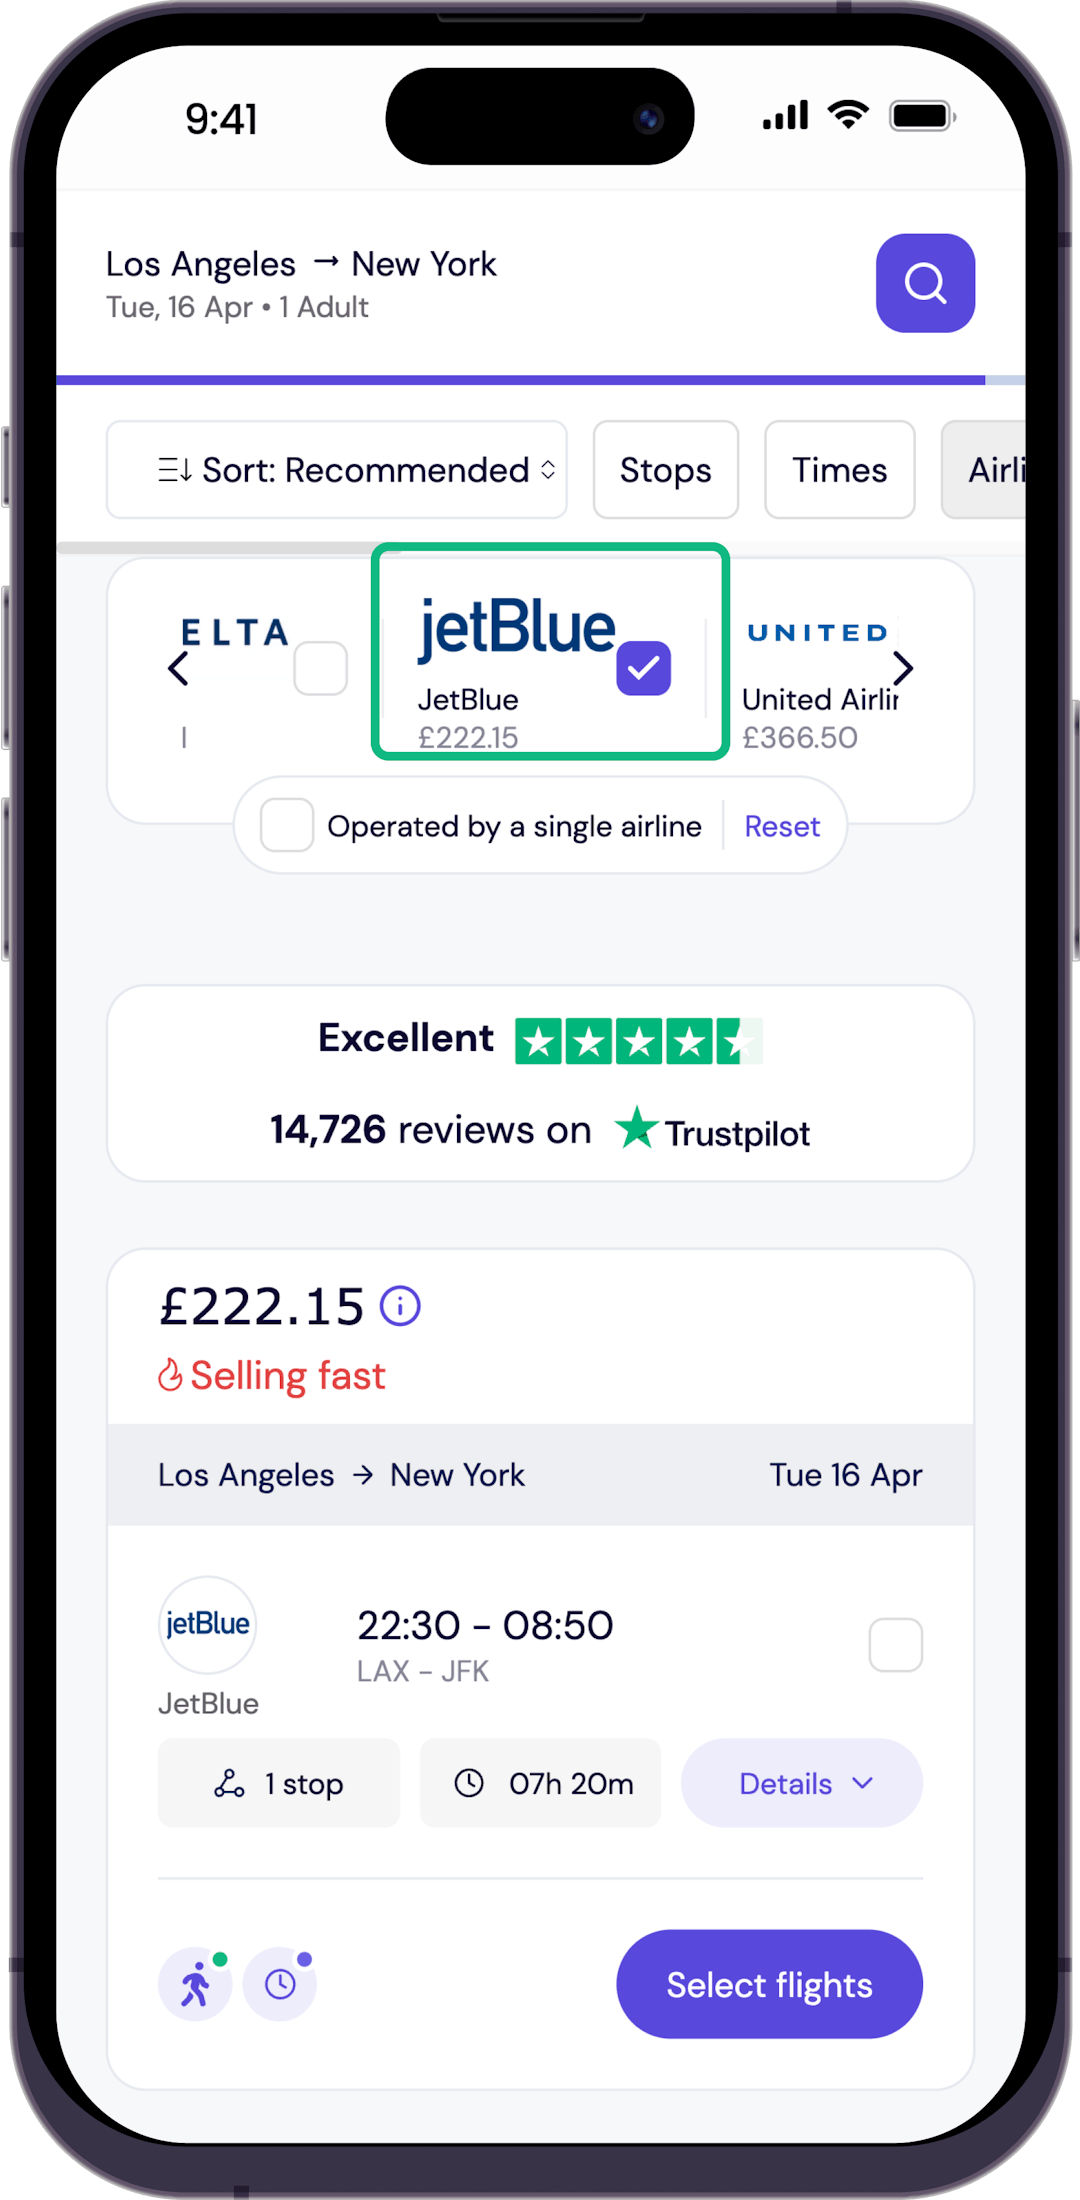 Step 2 - Select jetBlue